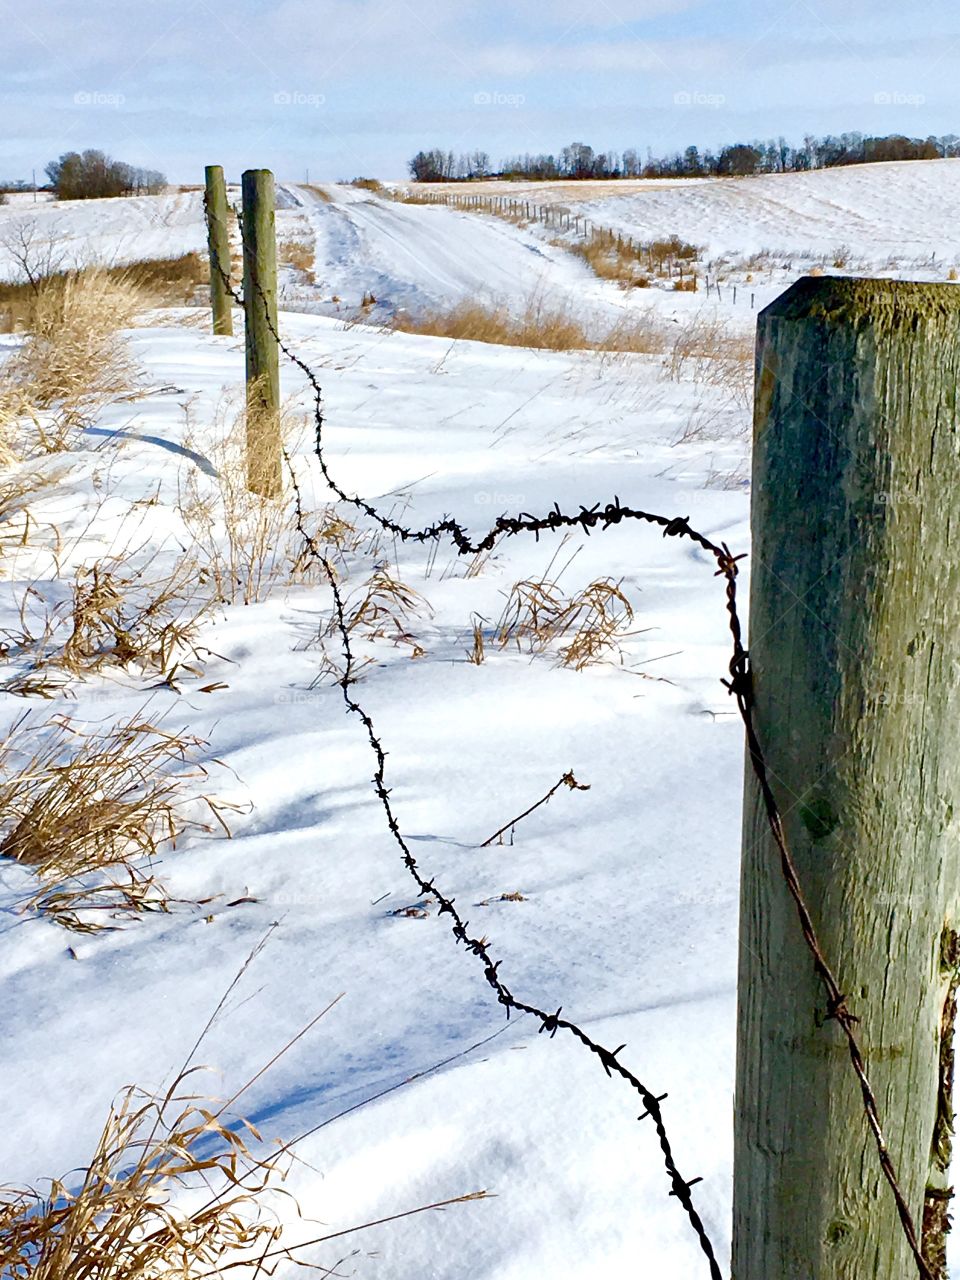 Wooden fence on snowy landscape